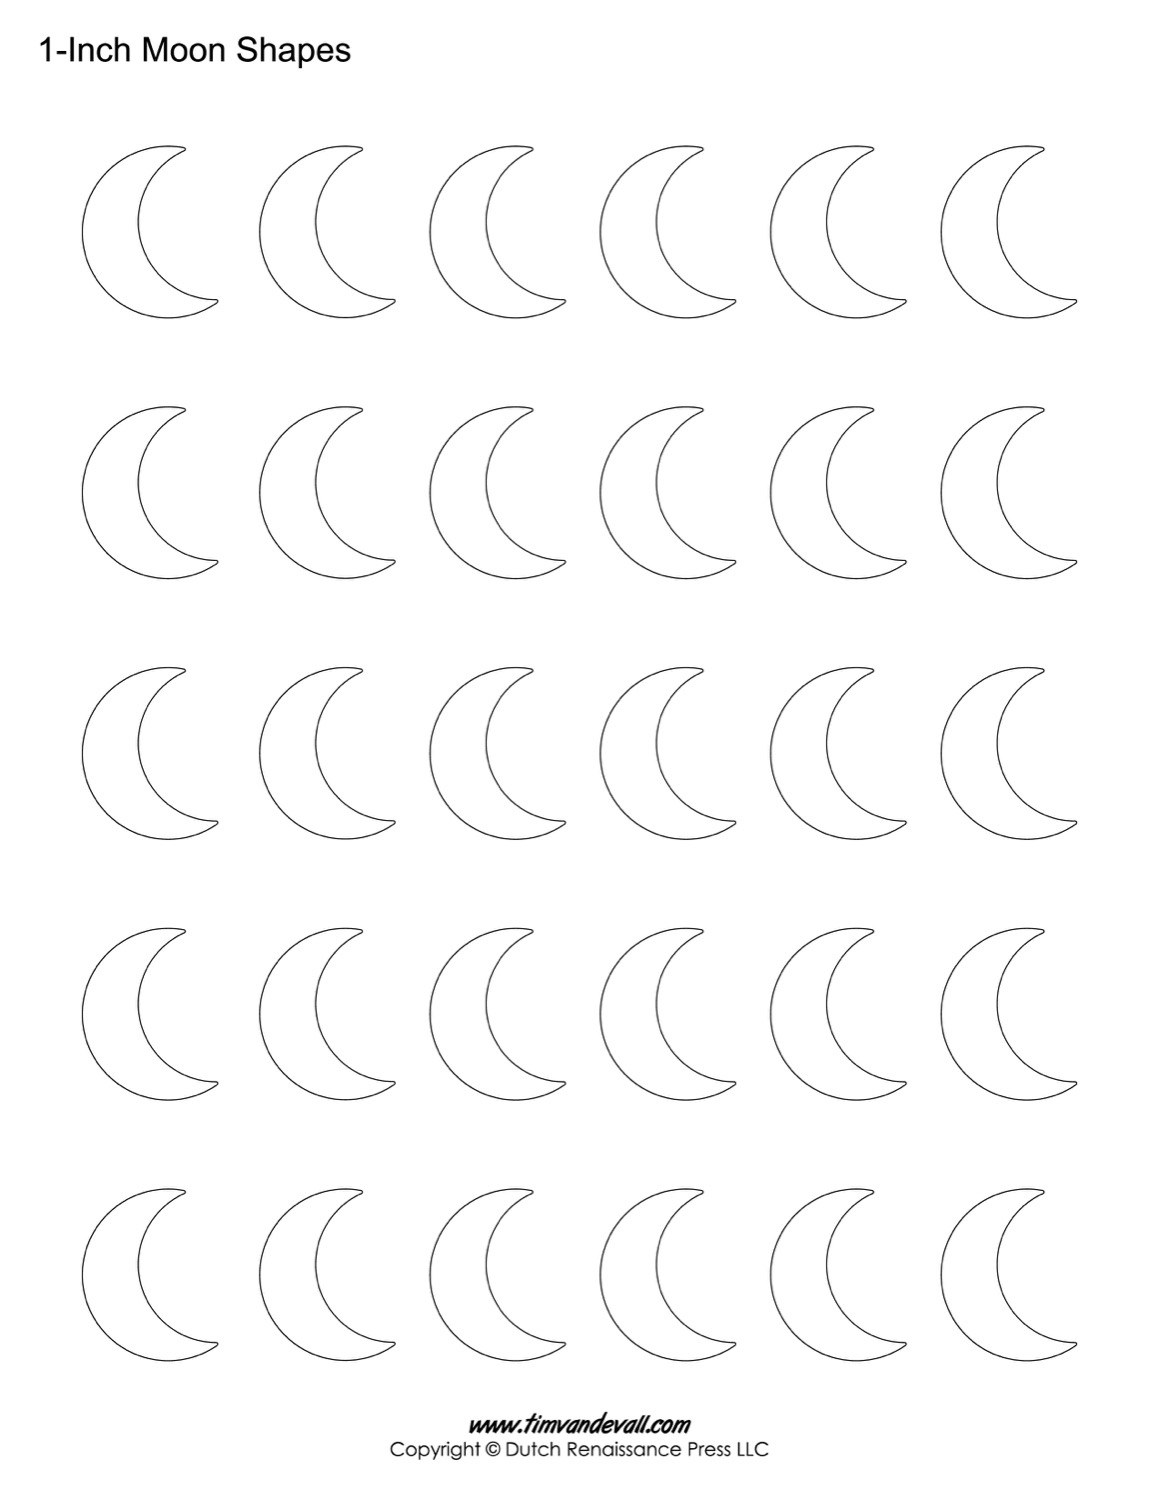 Blank Moon Templates | Printable Moon Shapes - Free Printable Shapes Templates